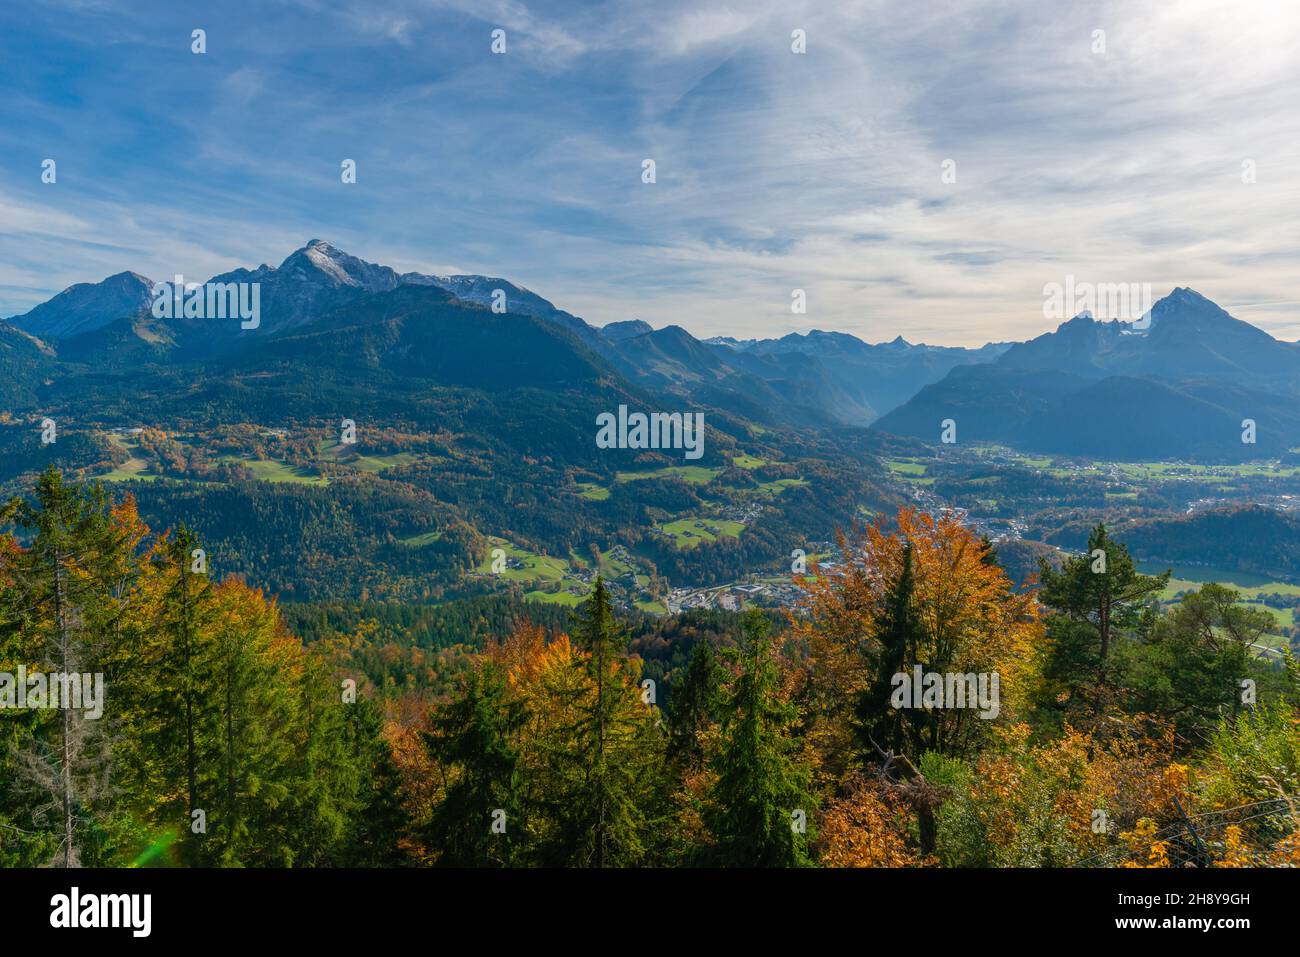 Watzmann mountain and Berchtesgaden seen from Kneifelspitz Mountain, 1168m asl, Maria Gern, Berchtesgaden, Upper Bavaria, Southern Germany Stock Photo